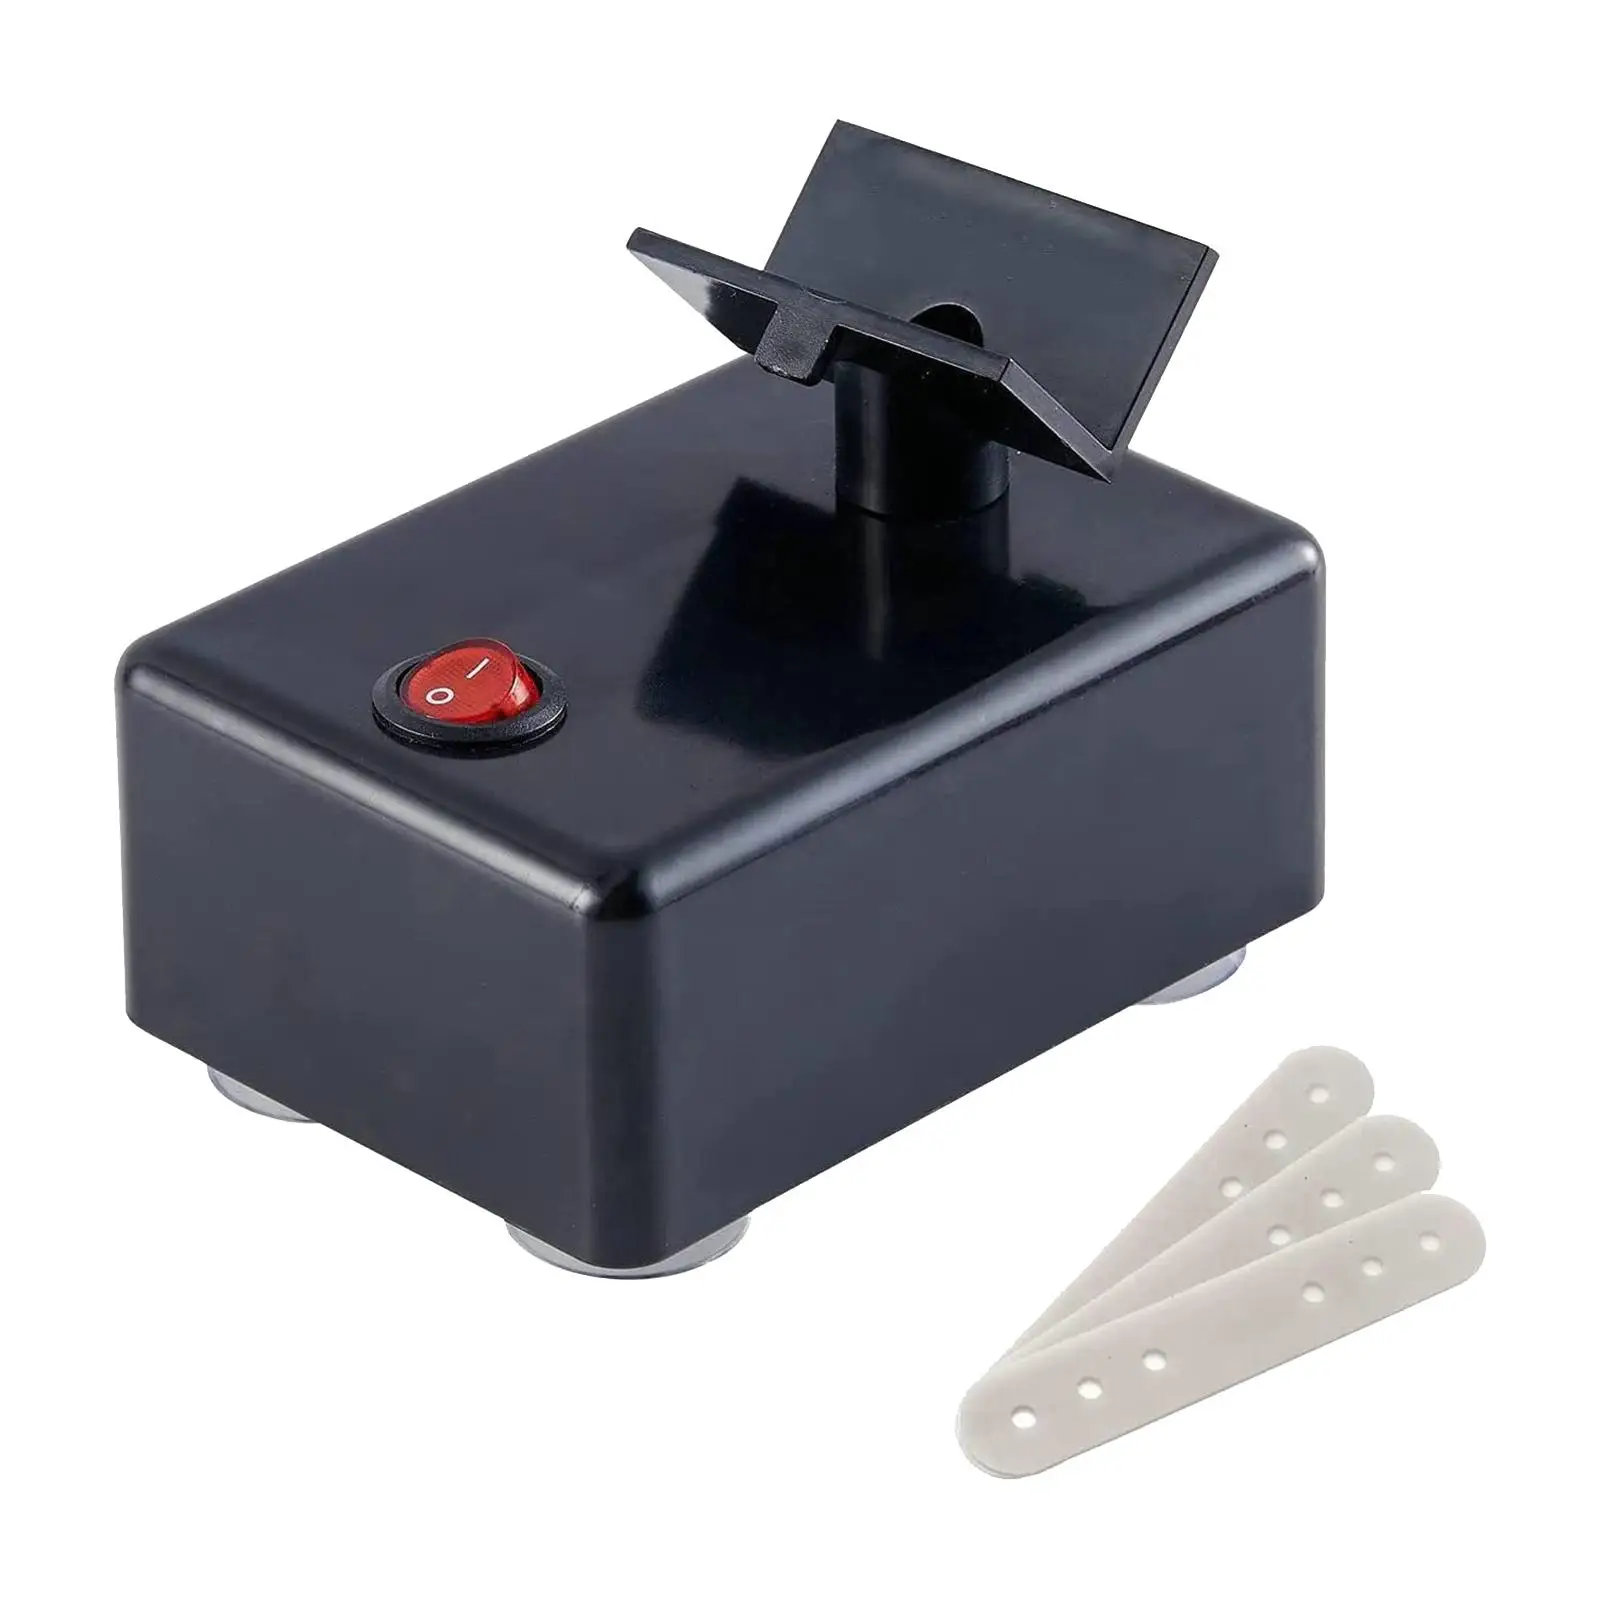 Portable Nail Polish Shaker Powerful Stirrer Liquid Mixer Easy to Use Durable for Makeup Eyelash Adhesives Ink Manicurist Salons